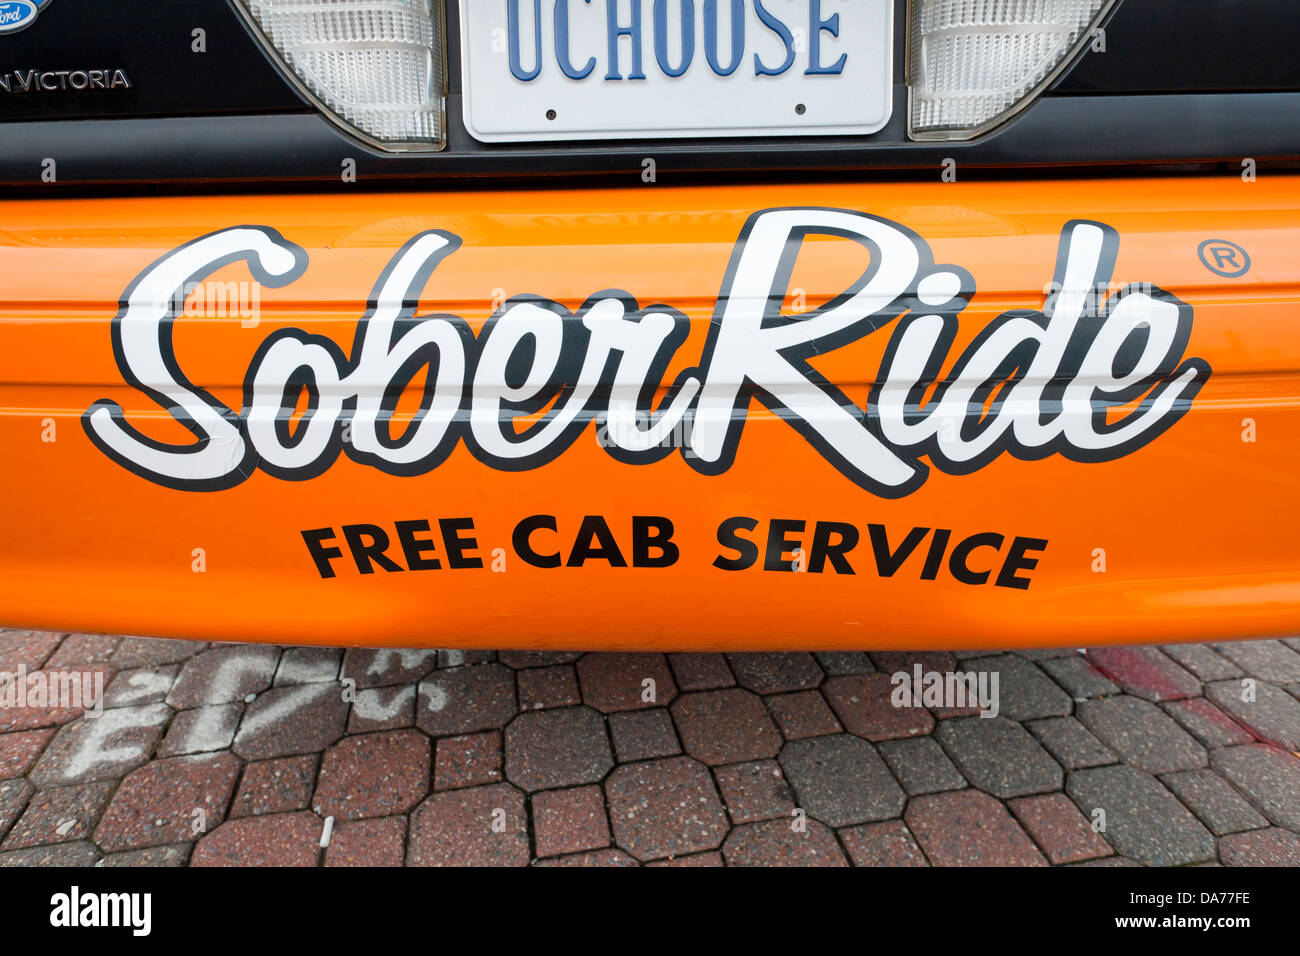 SoberRide-taxi Stockfoto